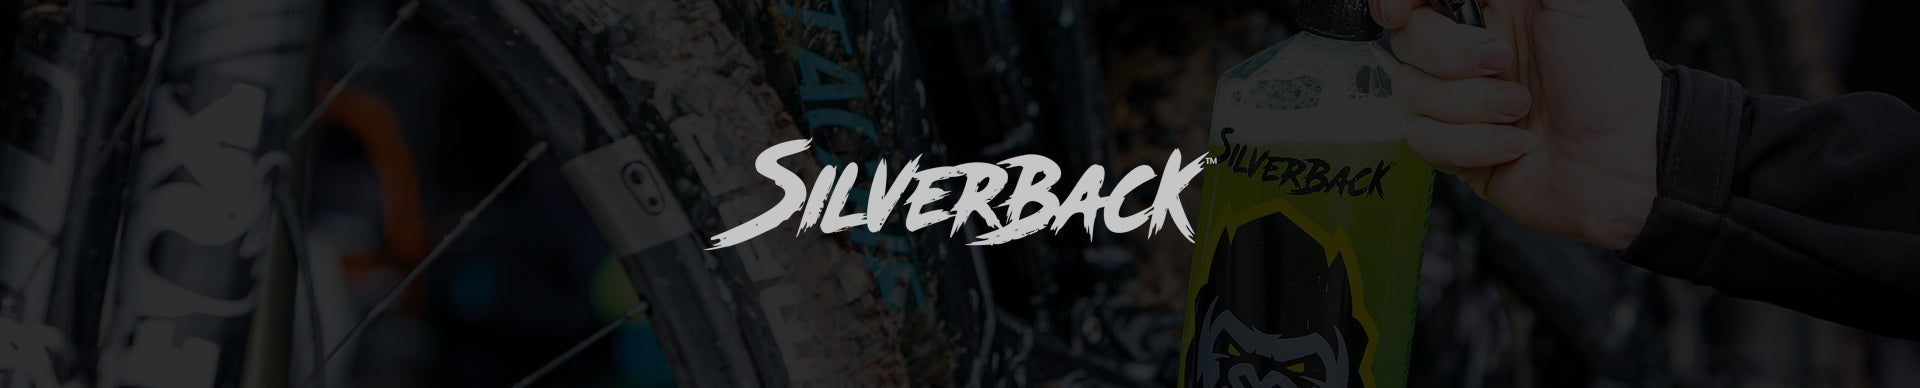 silverback-banner-header.jpg__PID:ee79c77d-55ff-44fb-91dd-89e7beb40be5